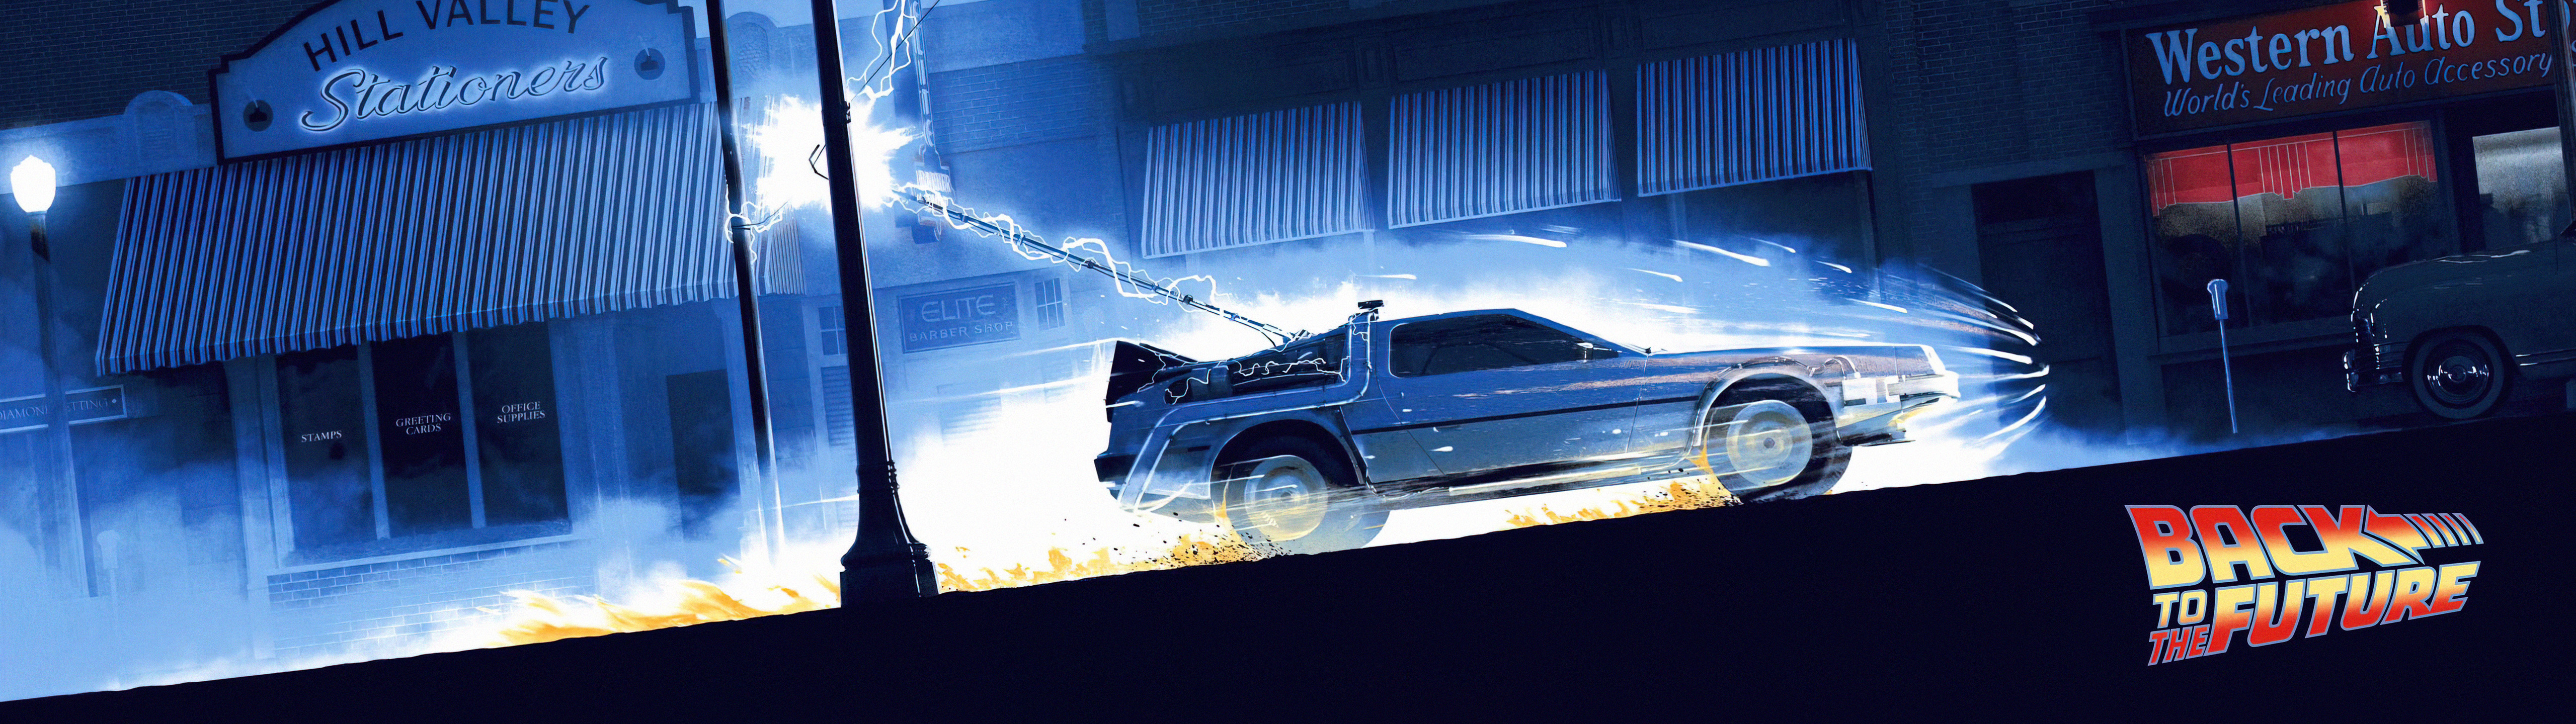 General 5120x1440 ultrawide Back to the Future movies DeLorean